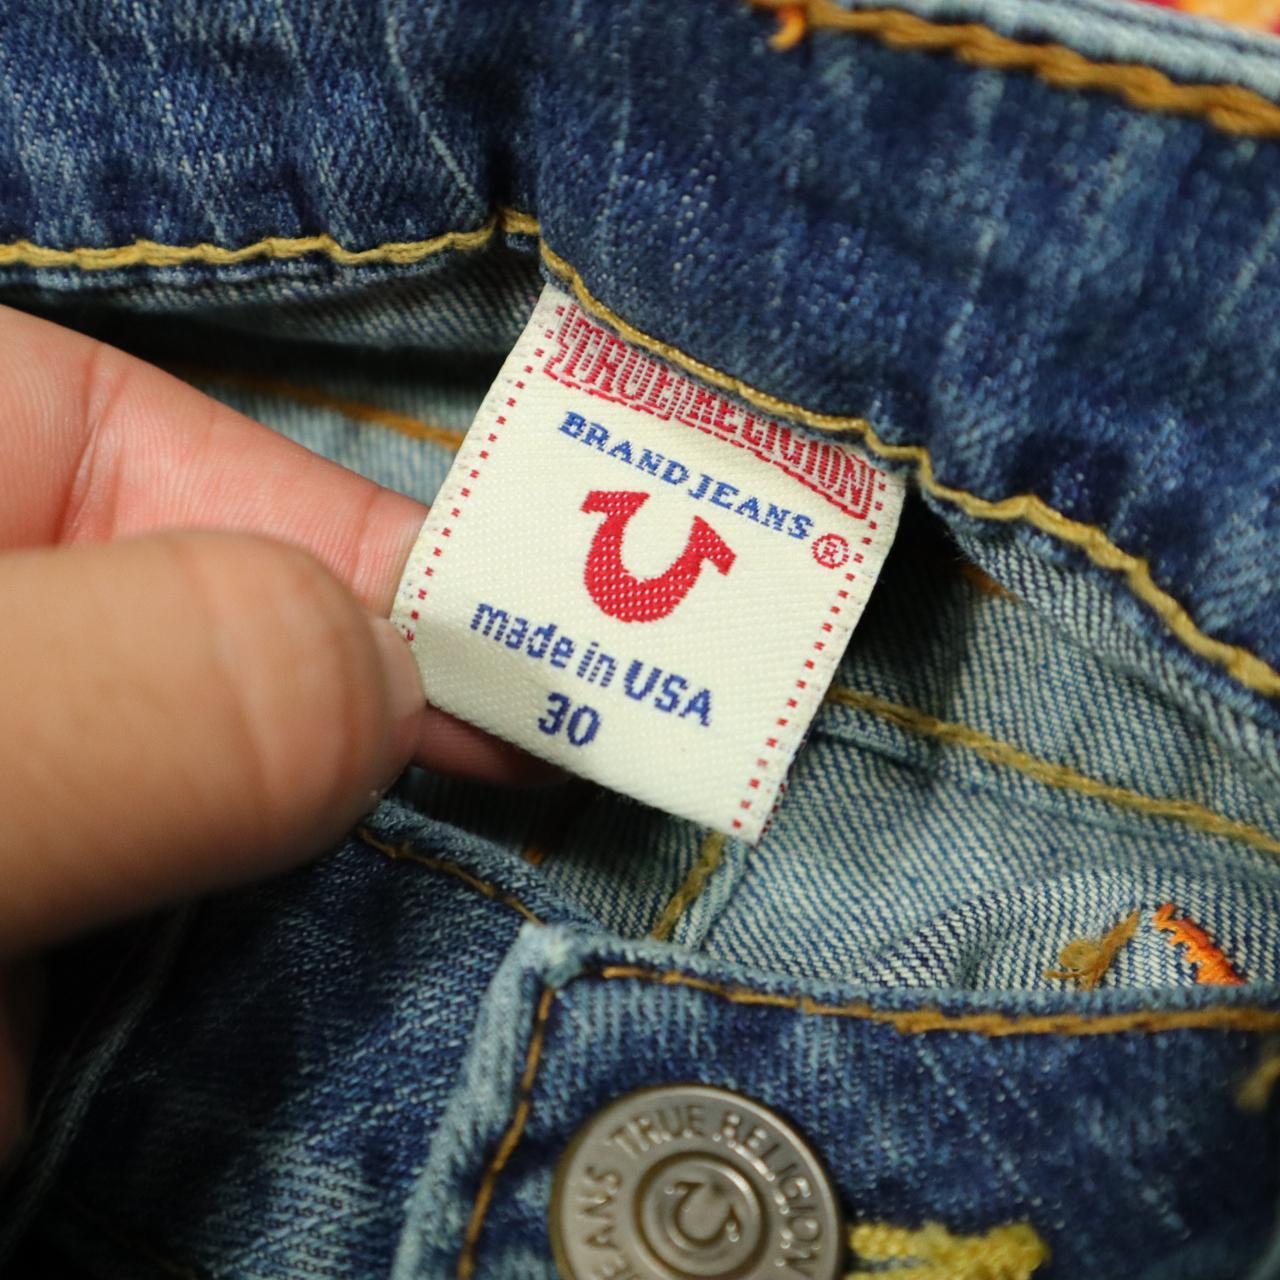 Product Image 4 - True Religion Jeans

Size 31x30

Waist: 31"
Length: